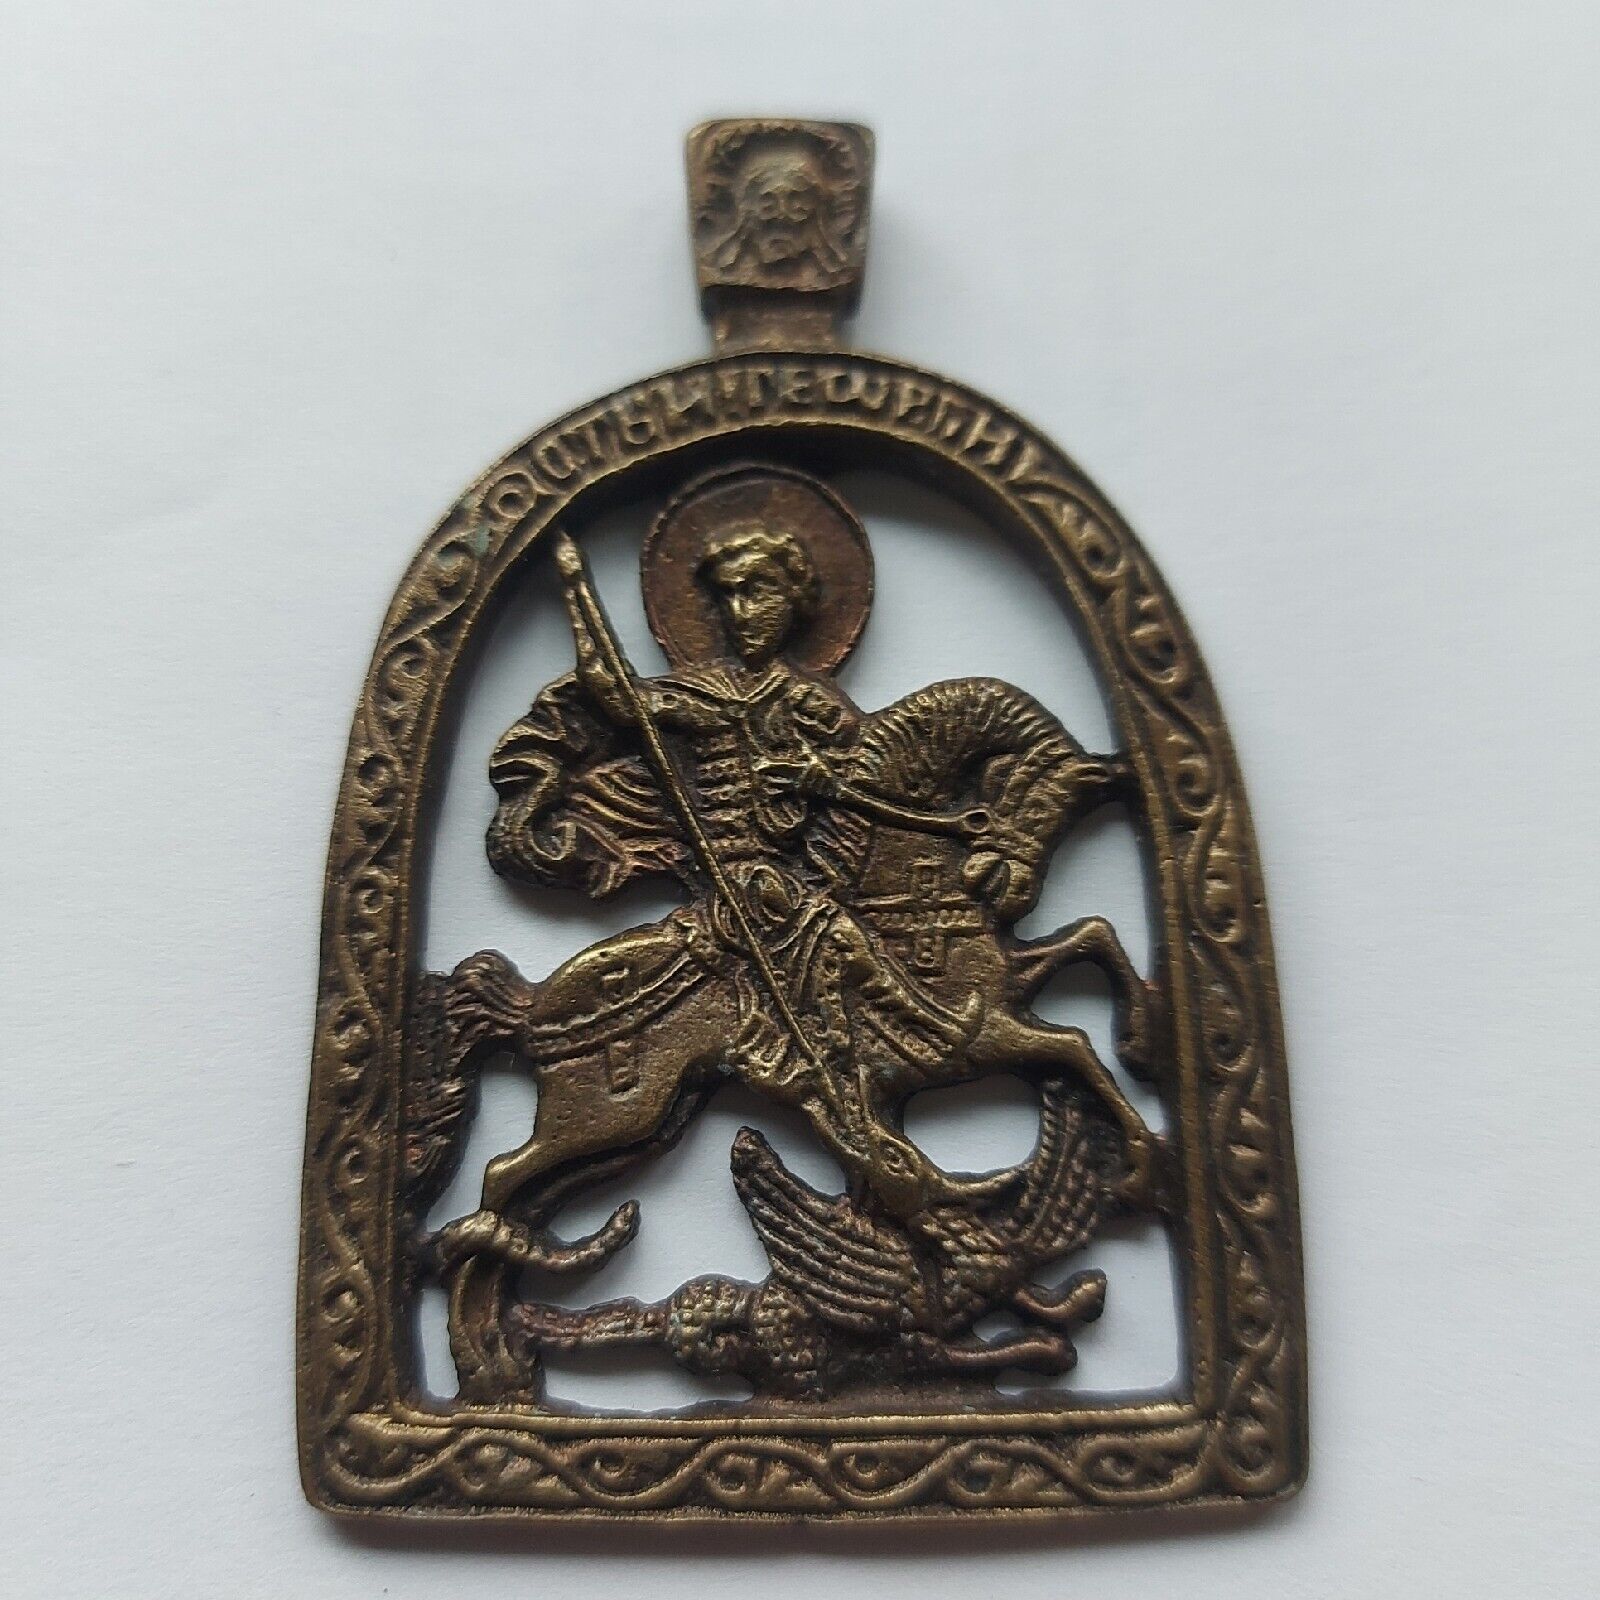   George the Victorious,Icon Ortodox Religious, bronze,20th century#403a